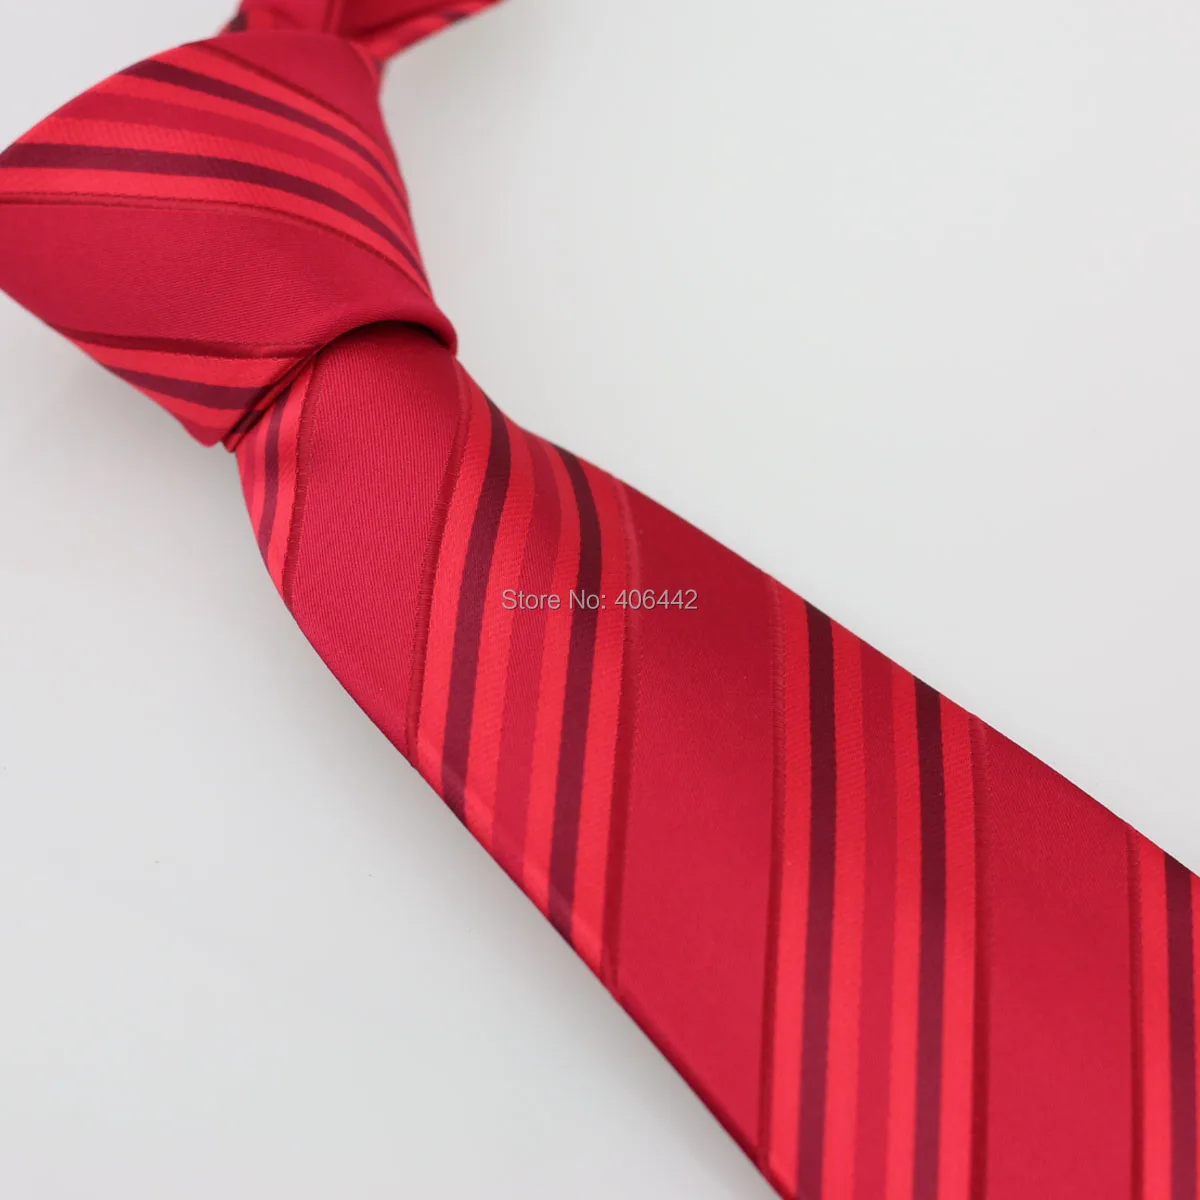 Coachella Men's ties Red With Black Diagonal Stripes Jacquard Woven Necktie Formal Neck Tie for men dress shirts Wedding | Аксессуары